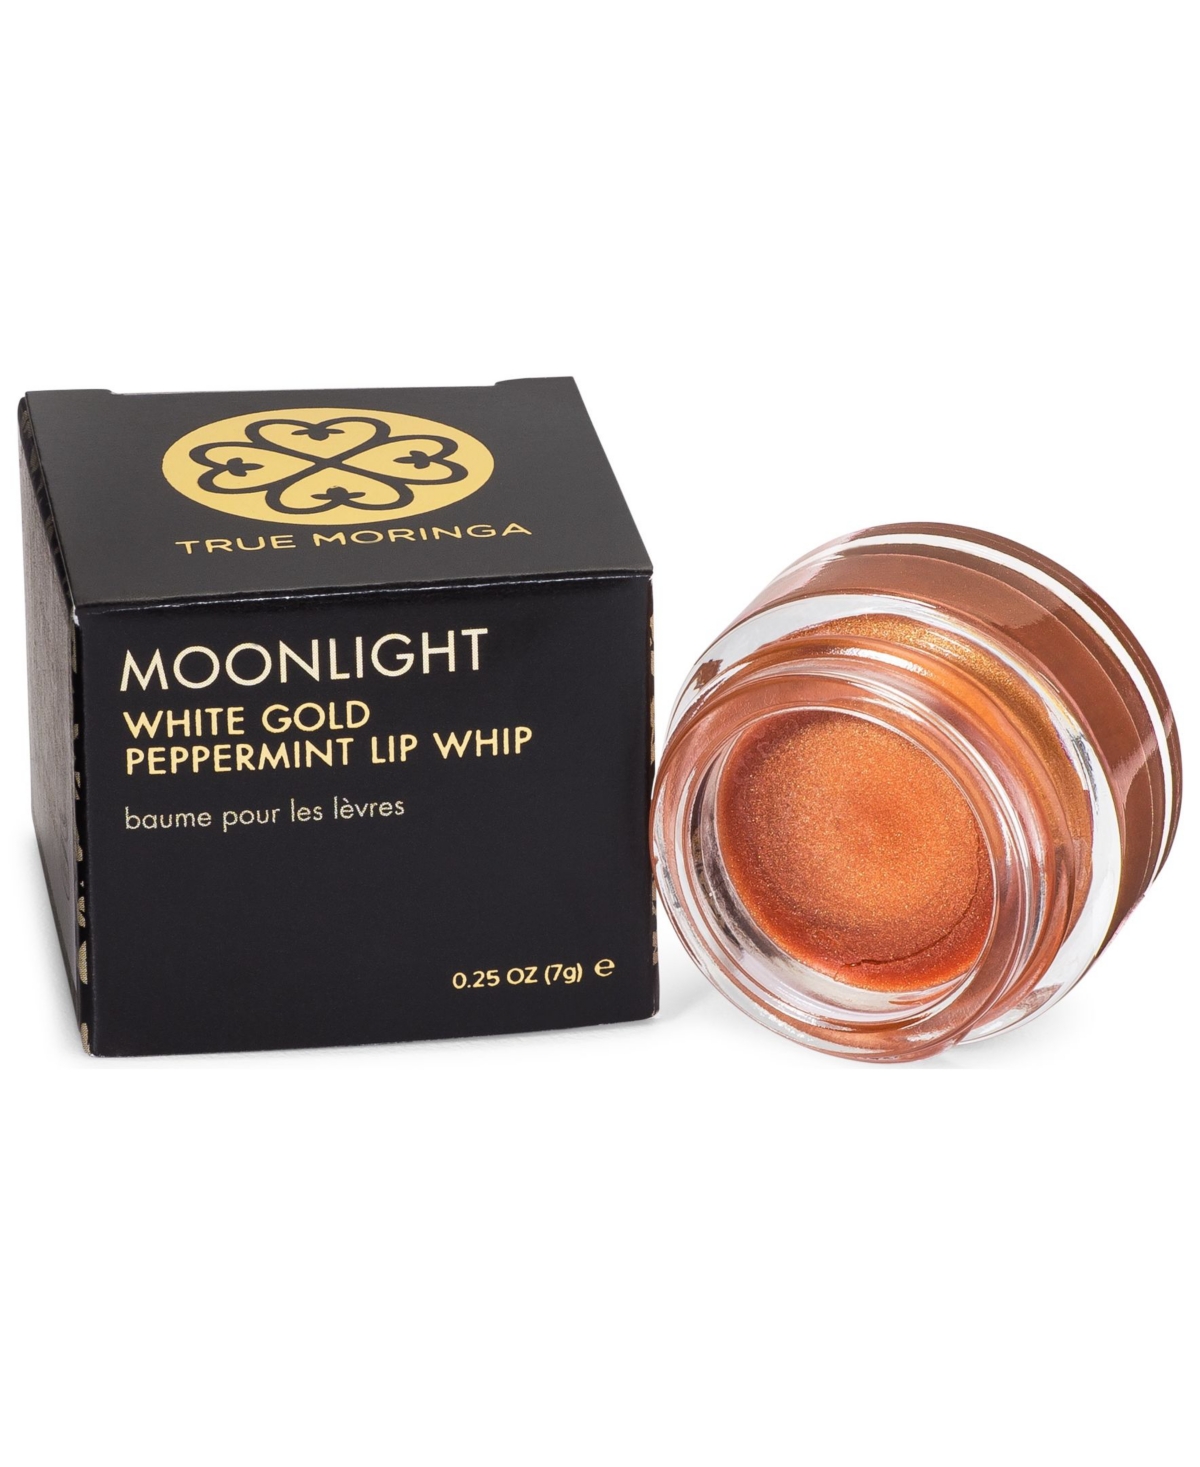 Moisturizing Shimmer White Gold Peppermint Lip Whip Balm, 0.25 oz. - Gold-Tone